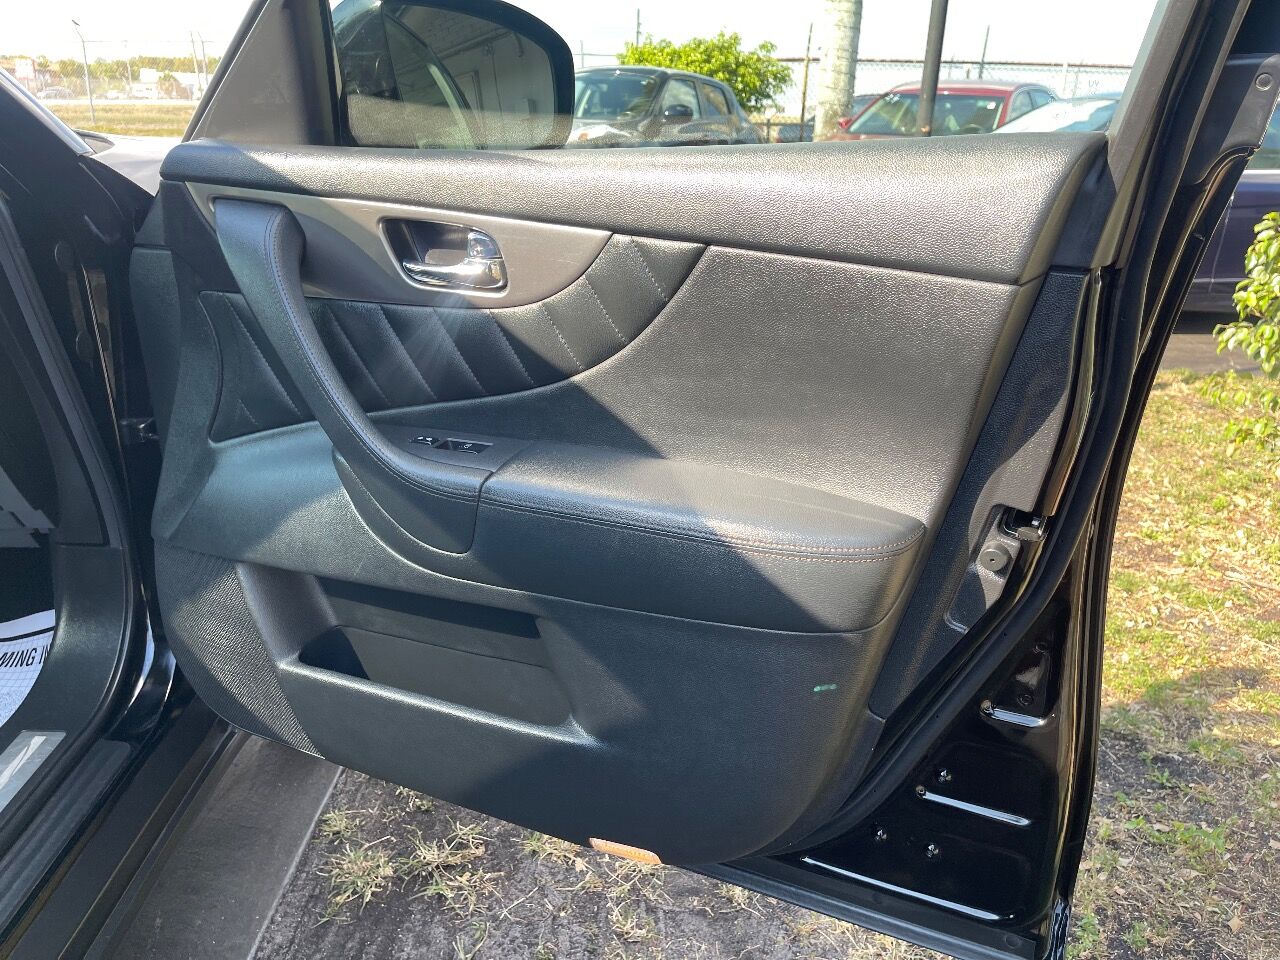 2017 INFINITI QX70 SUV / Crossover - $15,900